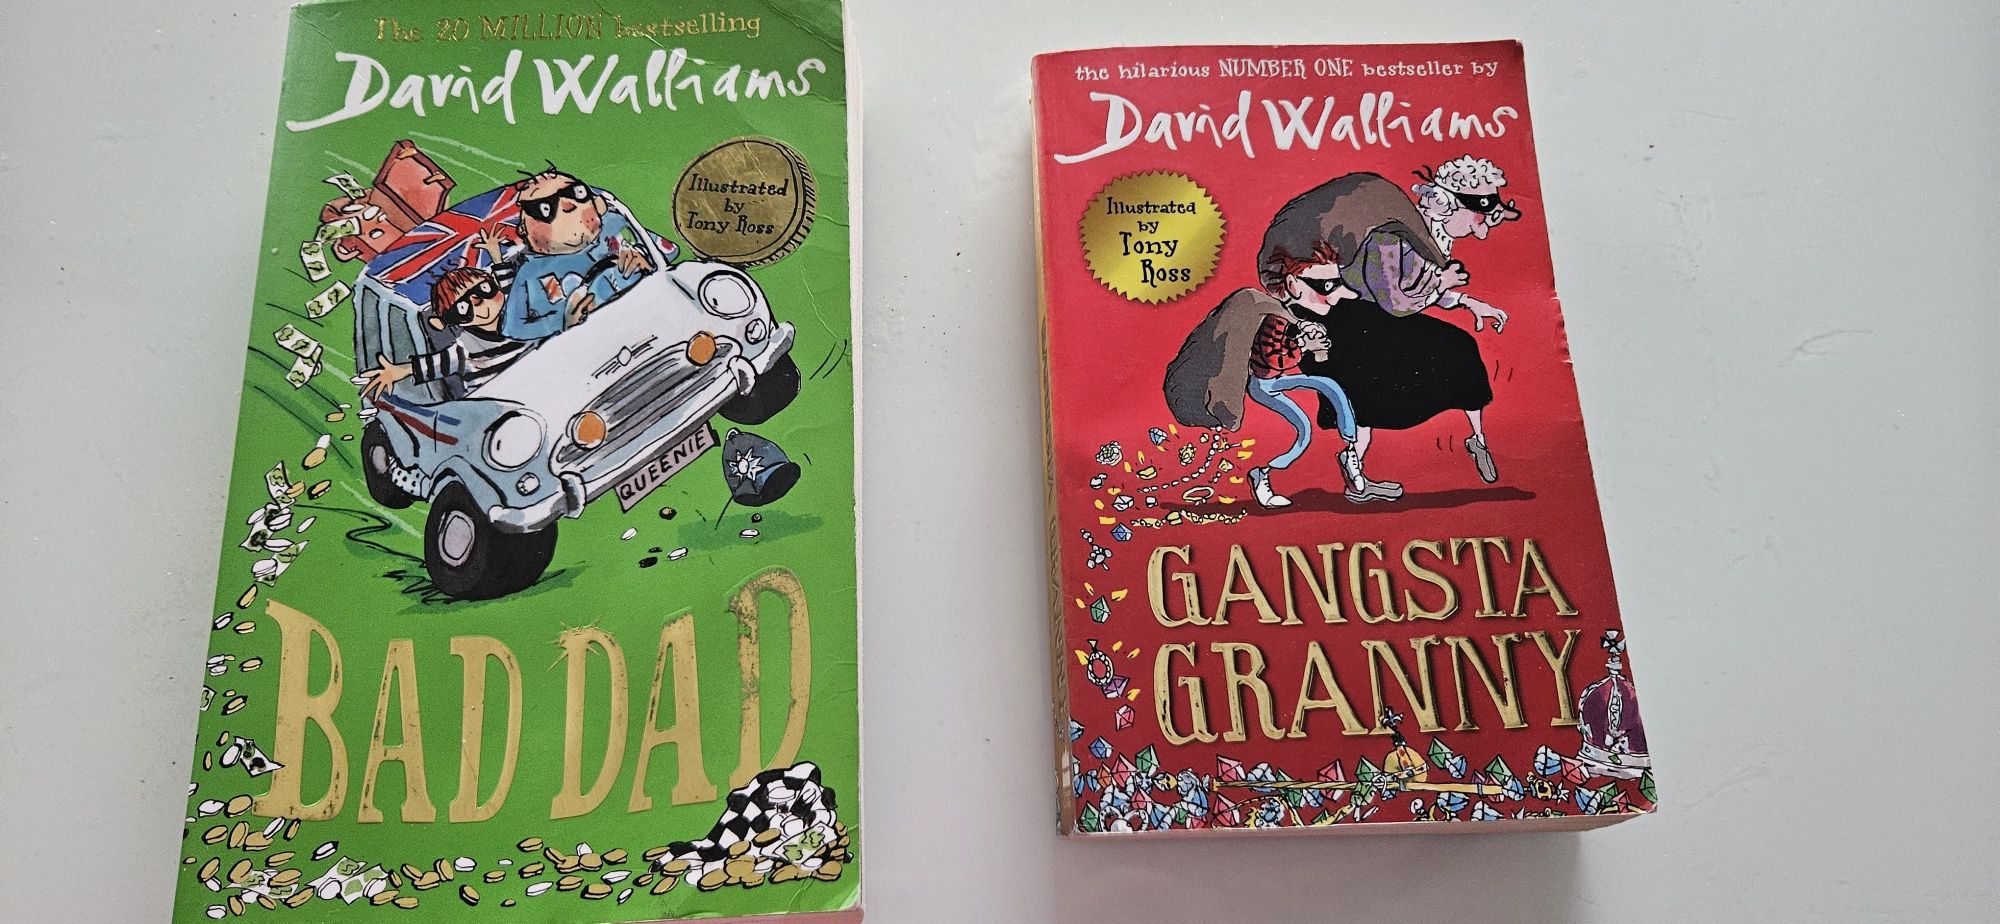 Bad Dad i Gangsta Granny